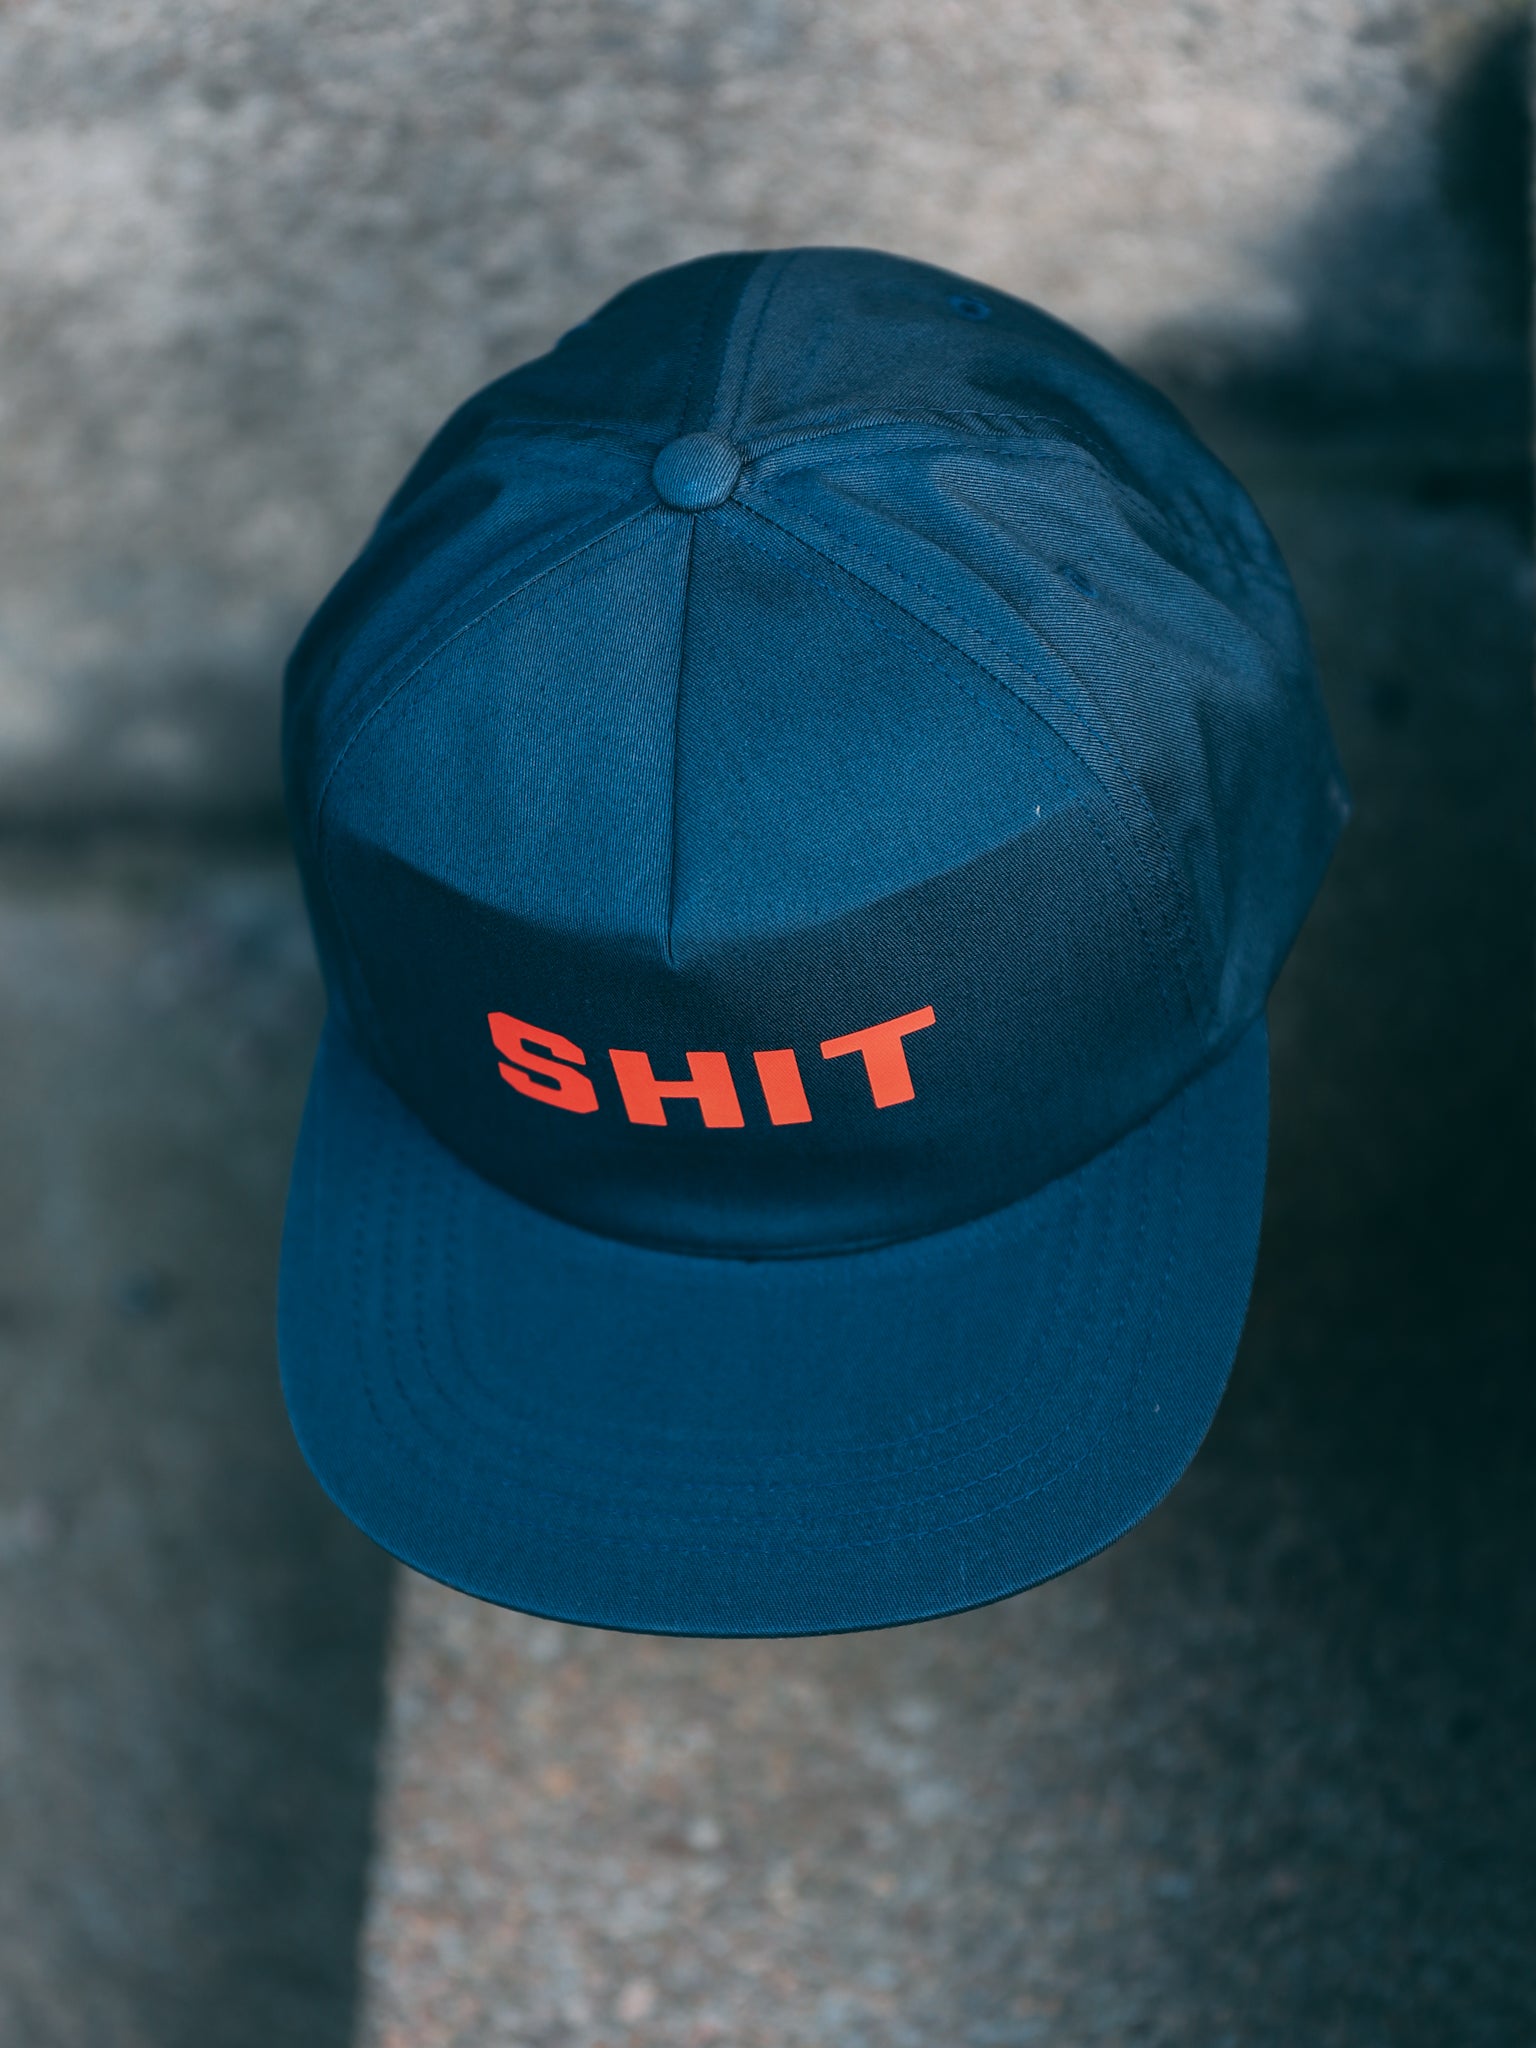 SHIT - Navy Cap